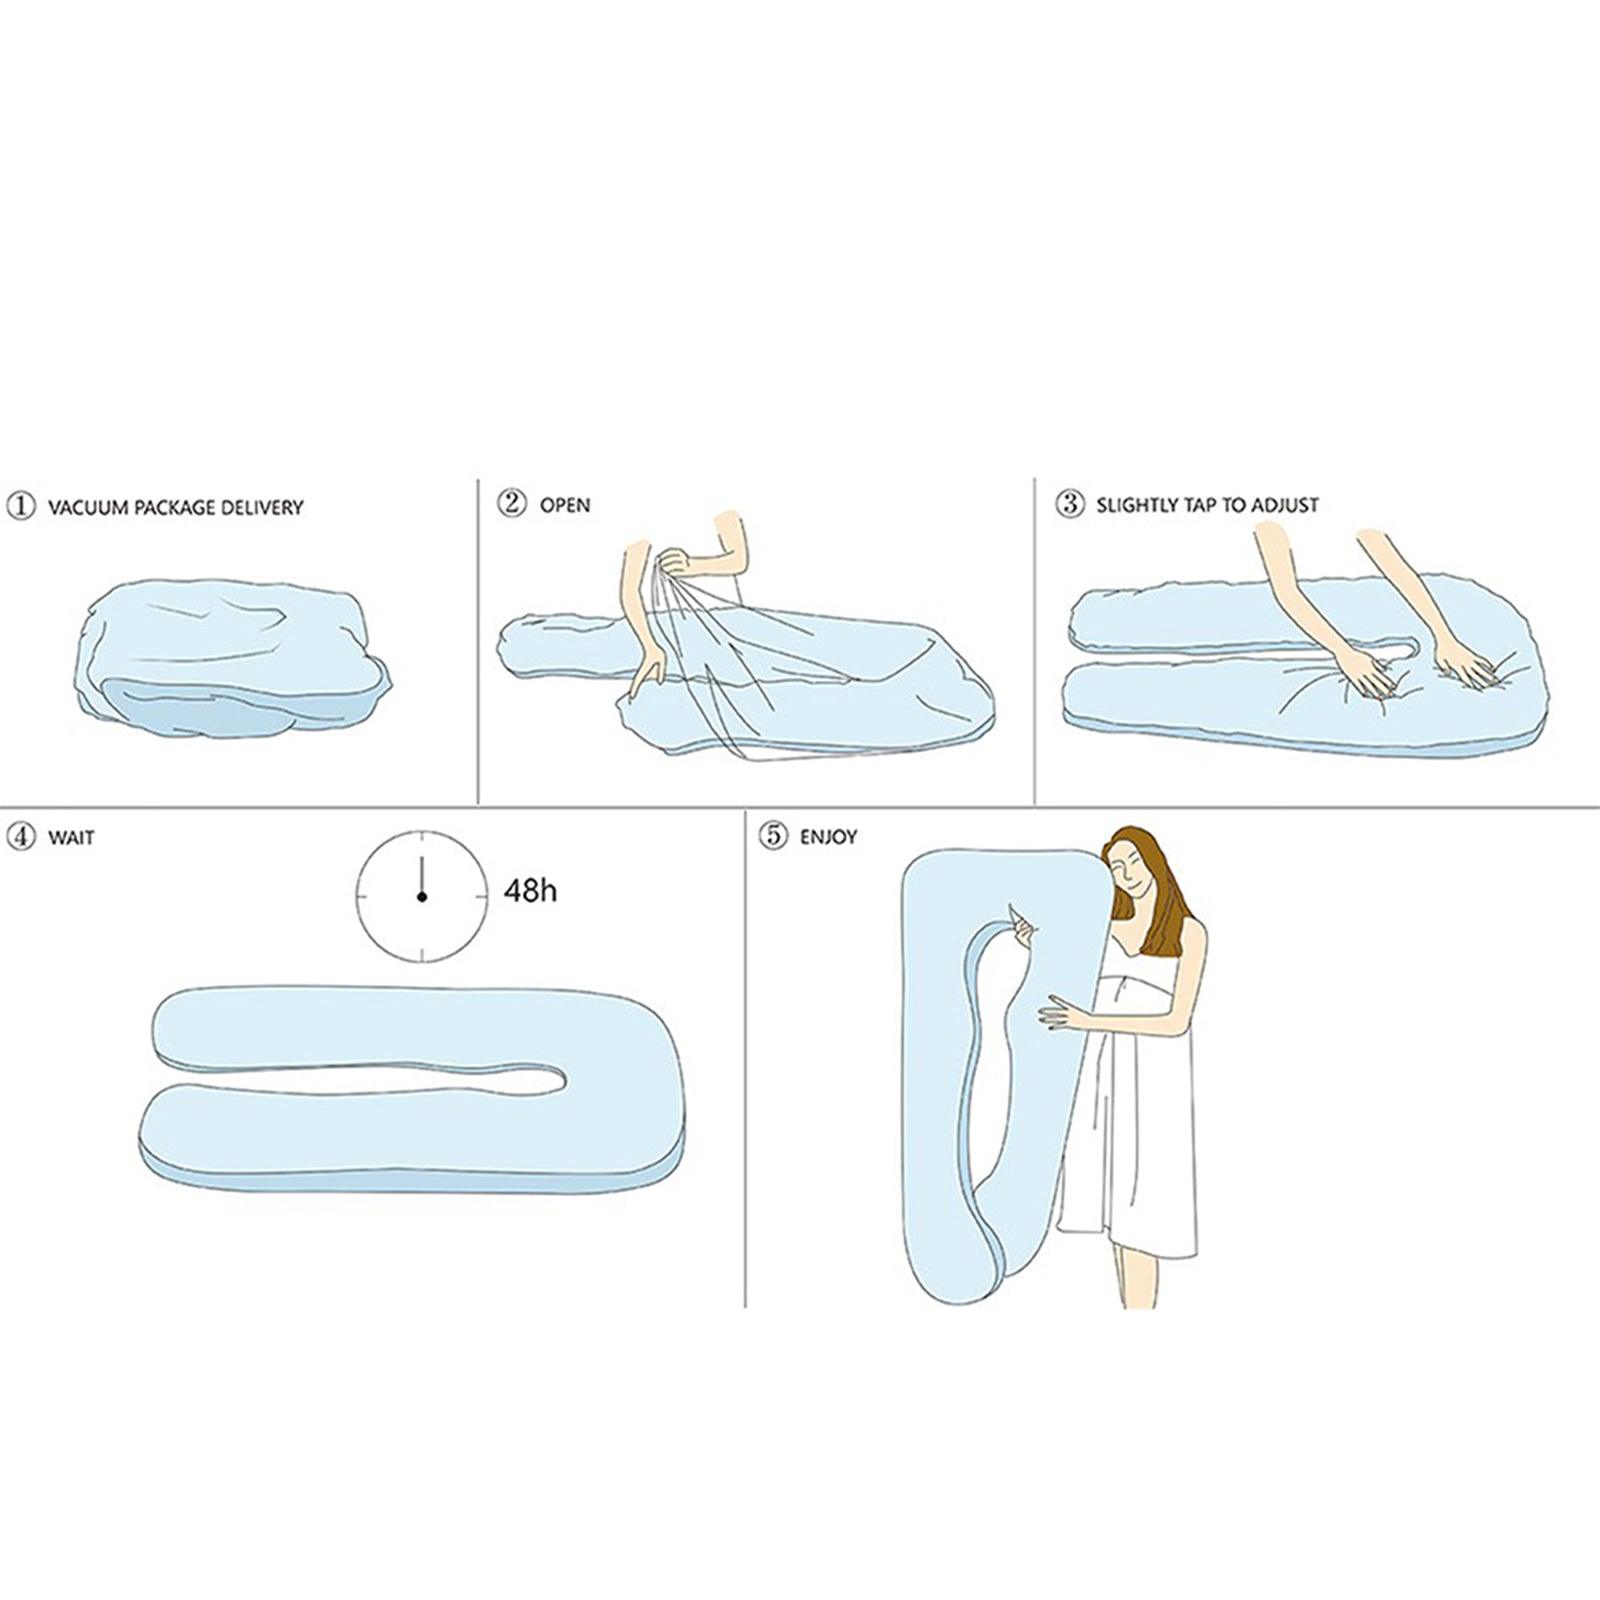 Home Essentials U Design Body Pillow High-Quality Maternity Sleeping...